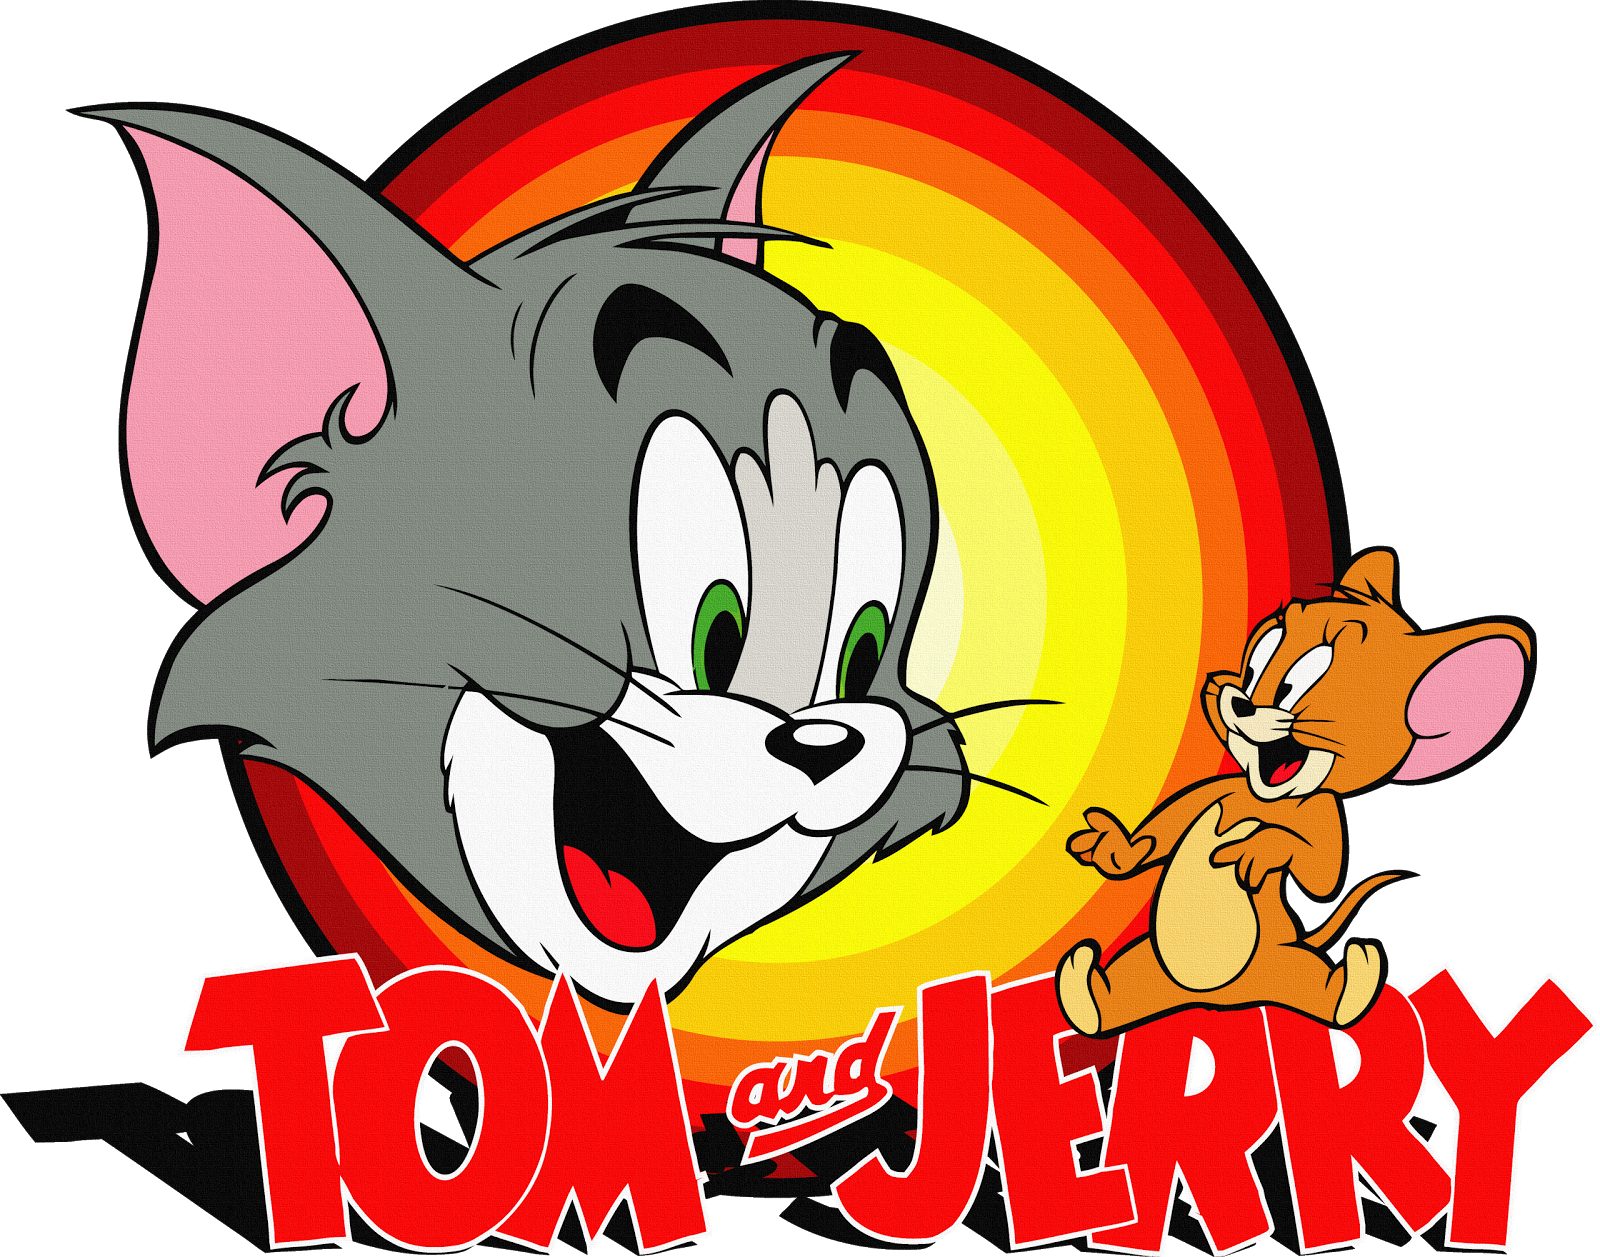 Logo „Tomek i Jerry”